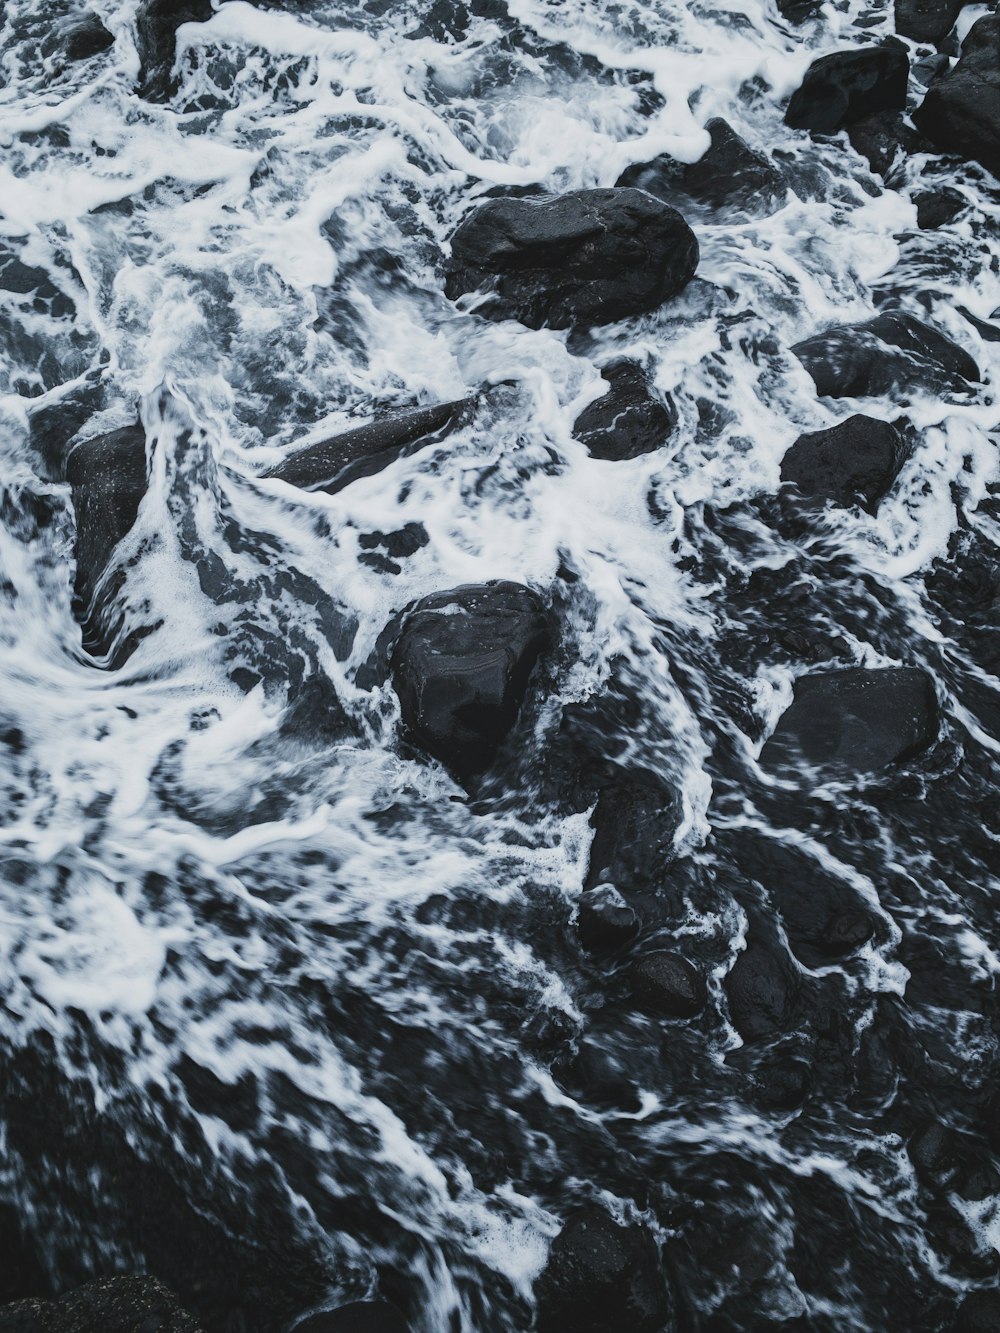 flowing body of water passing through rocks